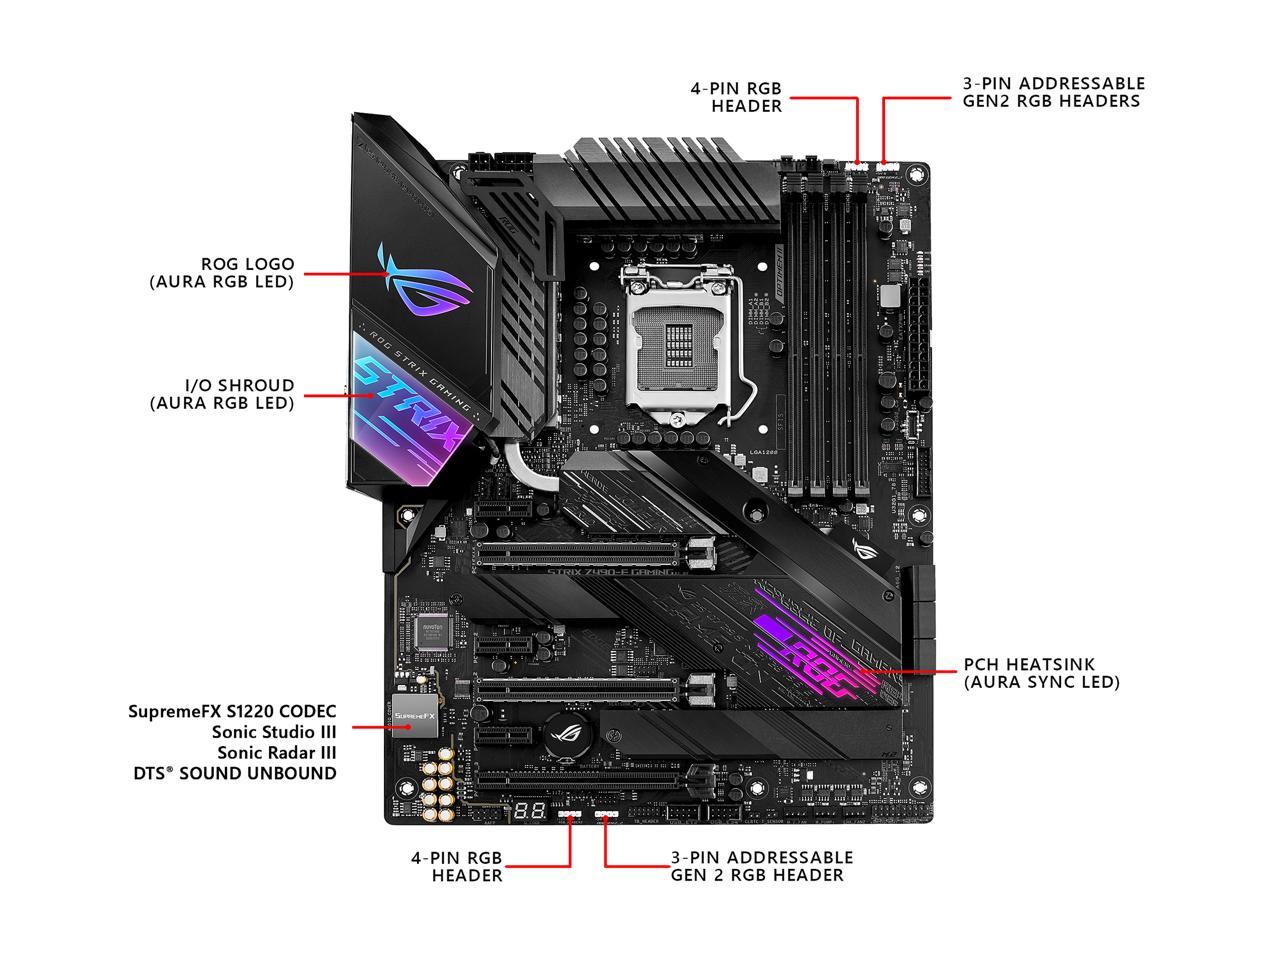 ASUS ROG STRIX Z490-E GAMING LGA 1200 (Intel 10th Gen) Intel Z490 (WiFi 6) SATA 6Gb/s ATX Intel Motherboard (14+2 Power Stages, DDR4 4600, Intel 2.5 Gb Ethernet, Bluetooth v5.1, Dual M.2 and AURA Sync)